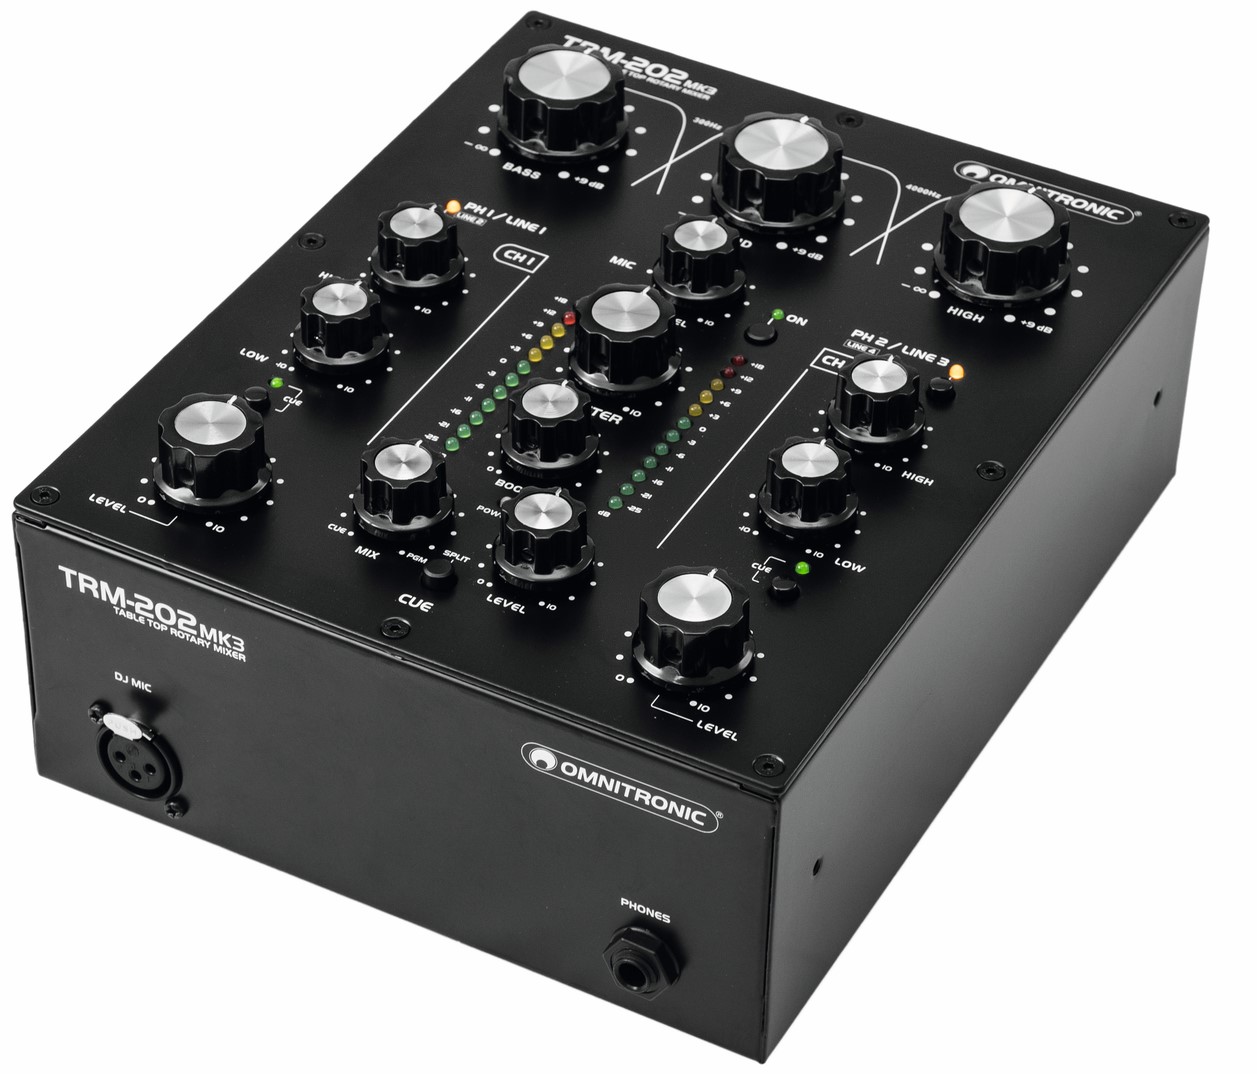 Omnitronic Trm-202mk3 2-channel Rotary Mixer - DJ mixer - Variation 1